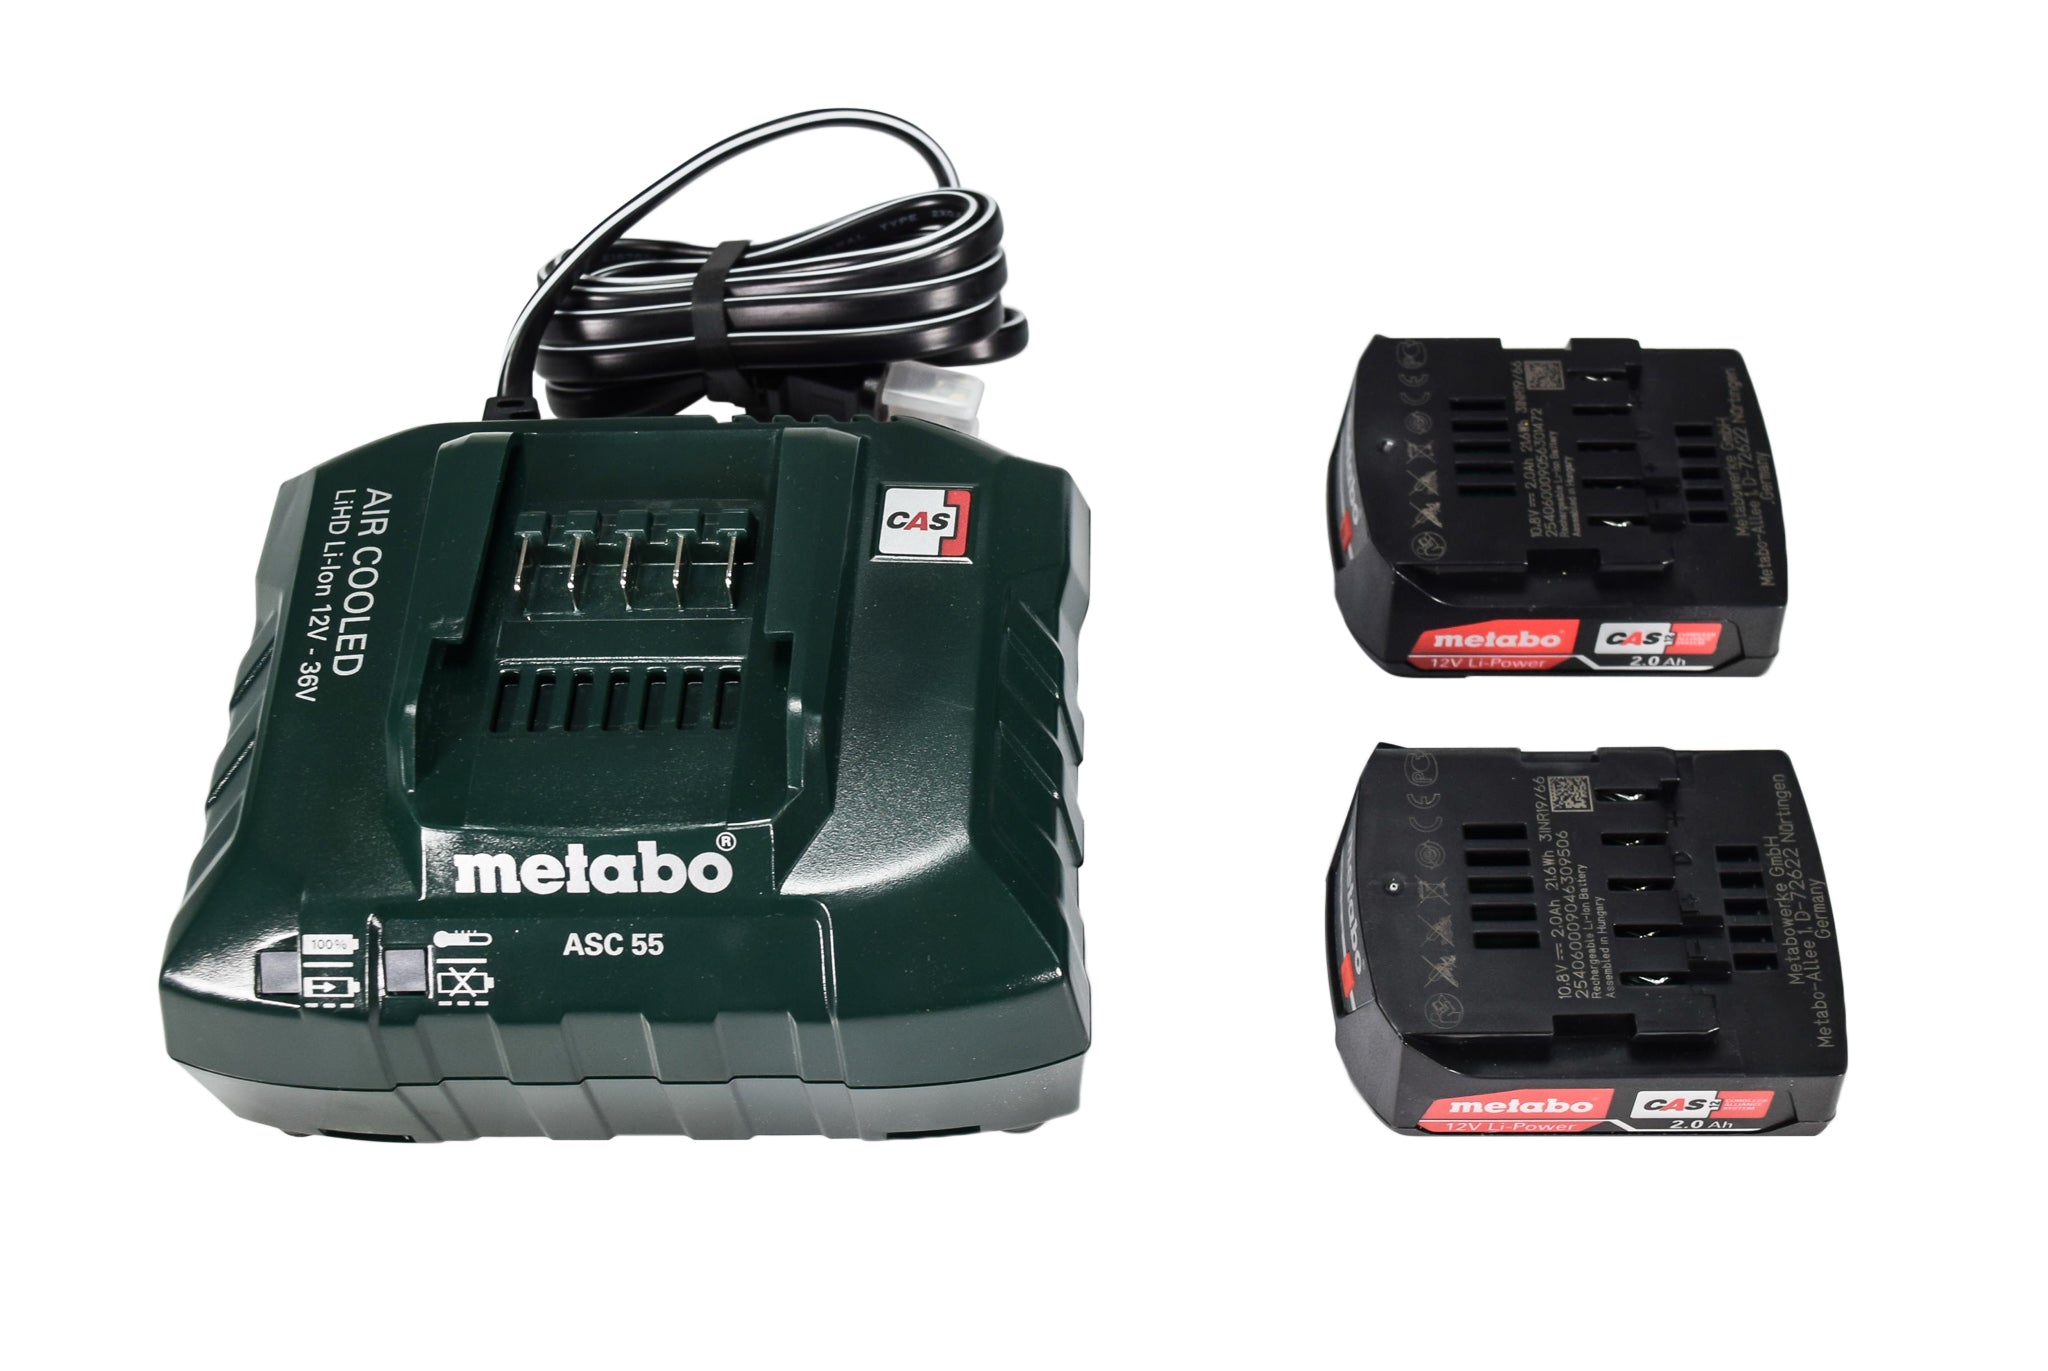 Metabo 685167520 Powermaxx 2.7.2 12 V Cordless Machines Combo Set